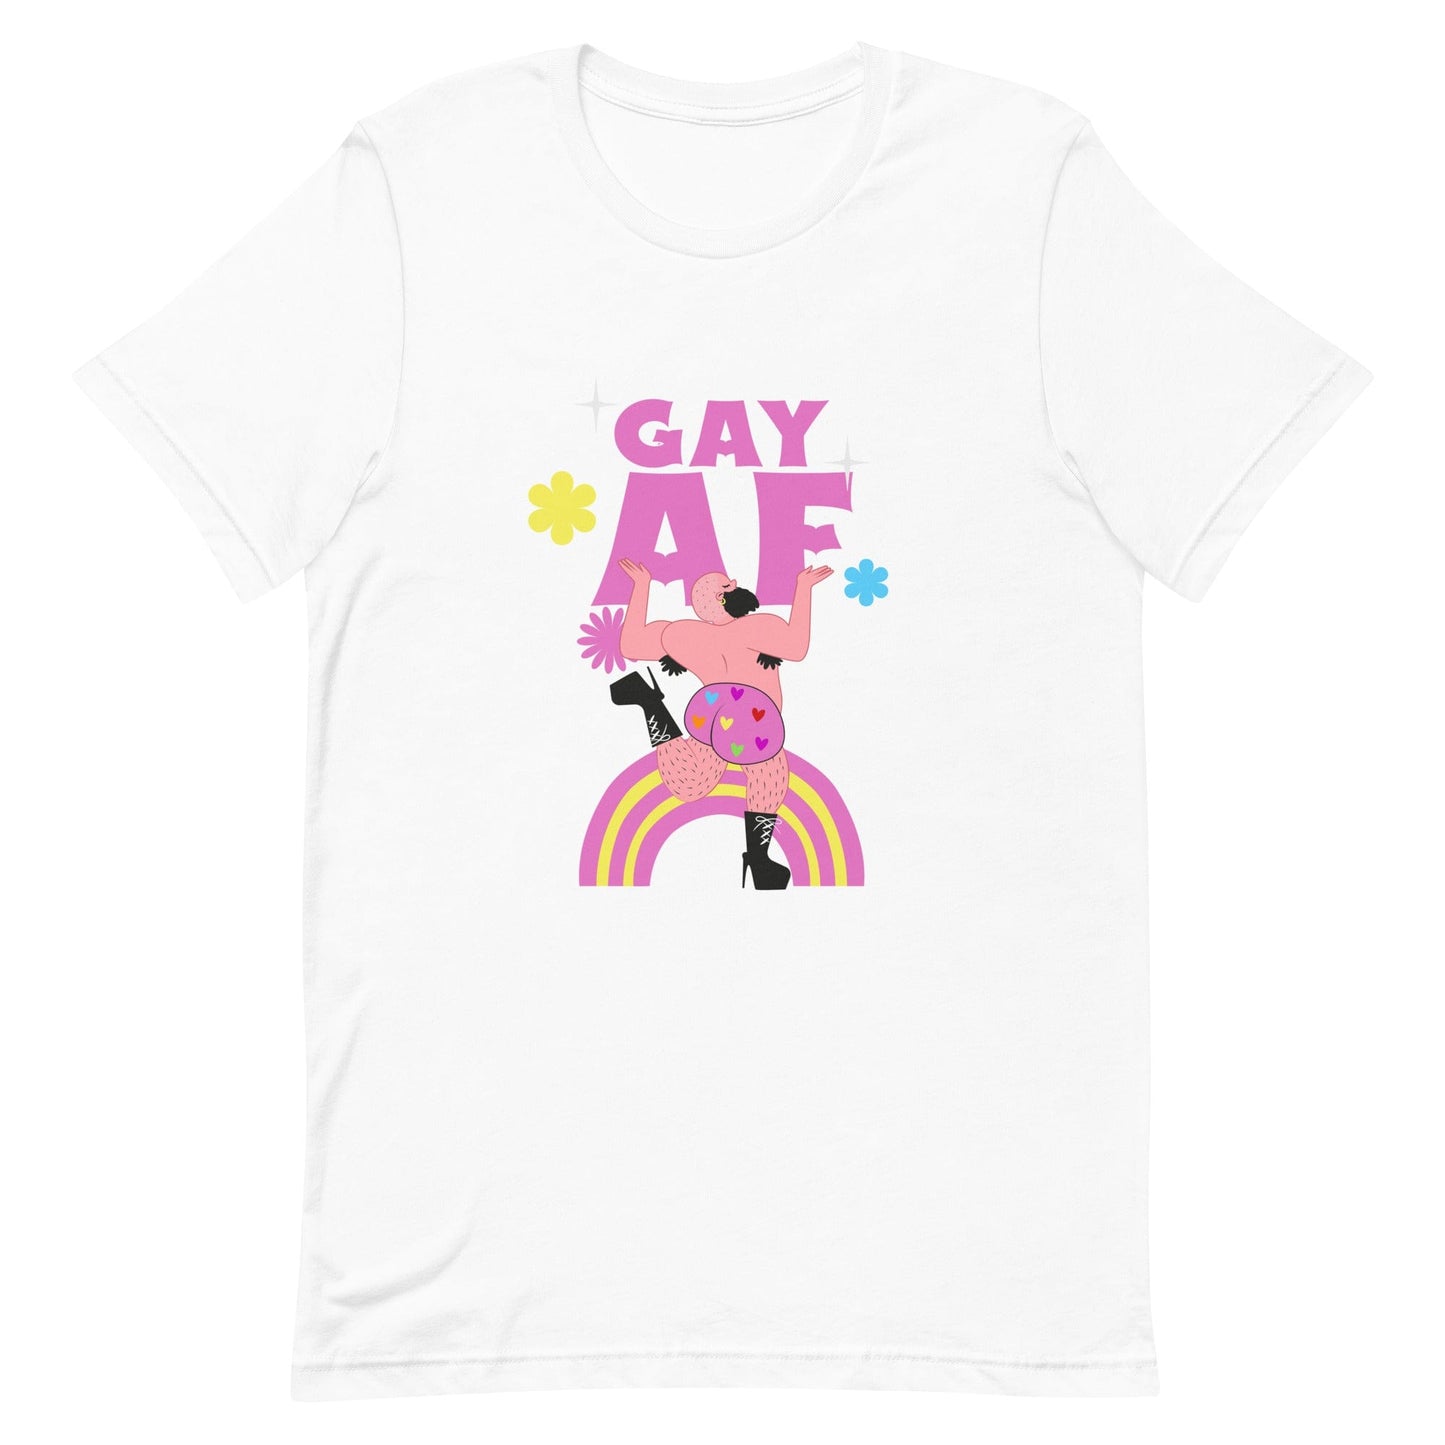 queer-gay-af-white-t-shirt-lgbtq-by-feminist-define